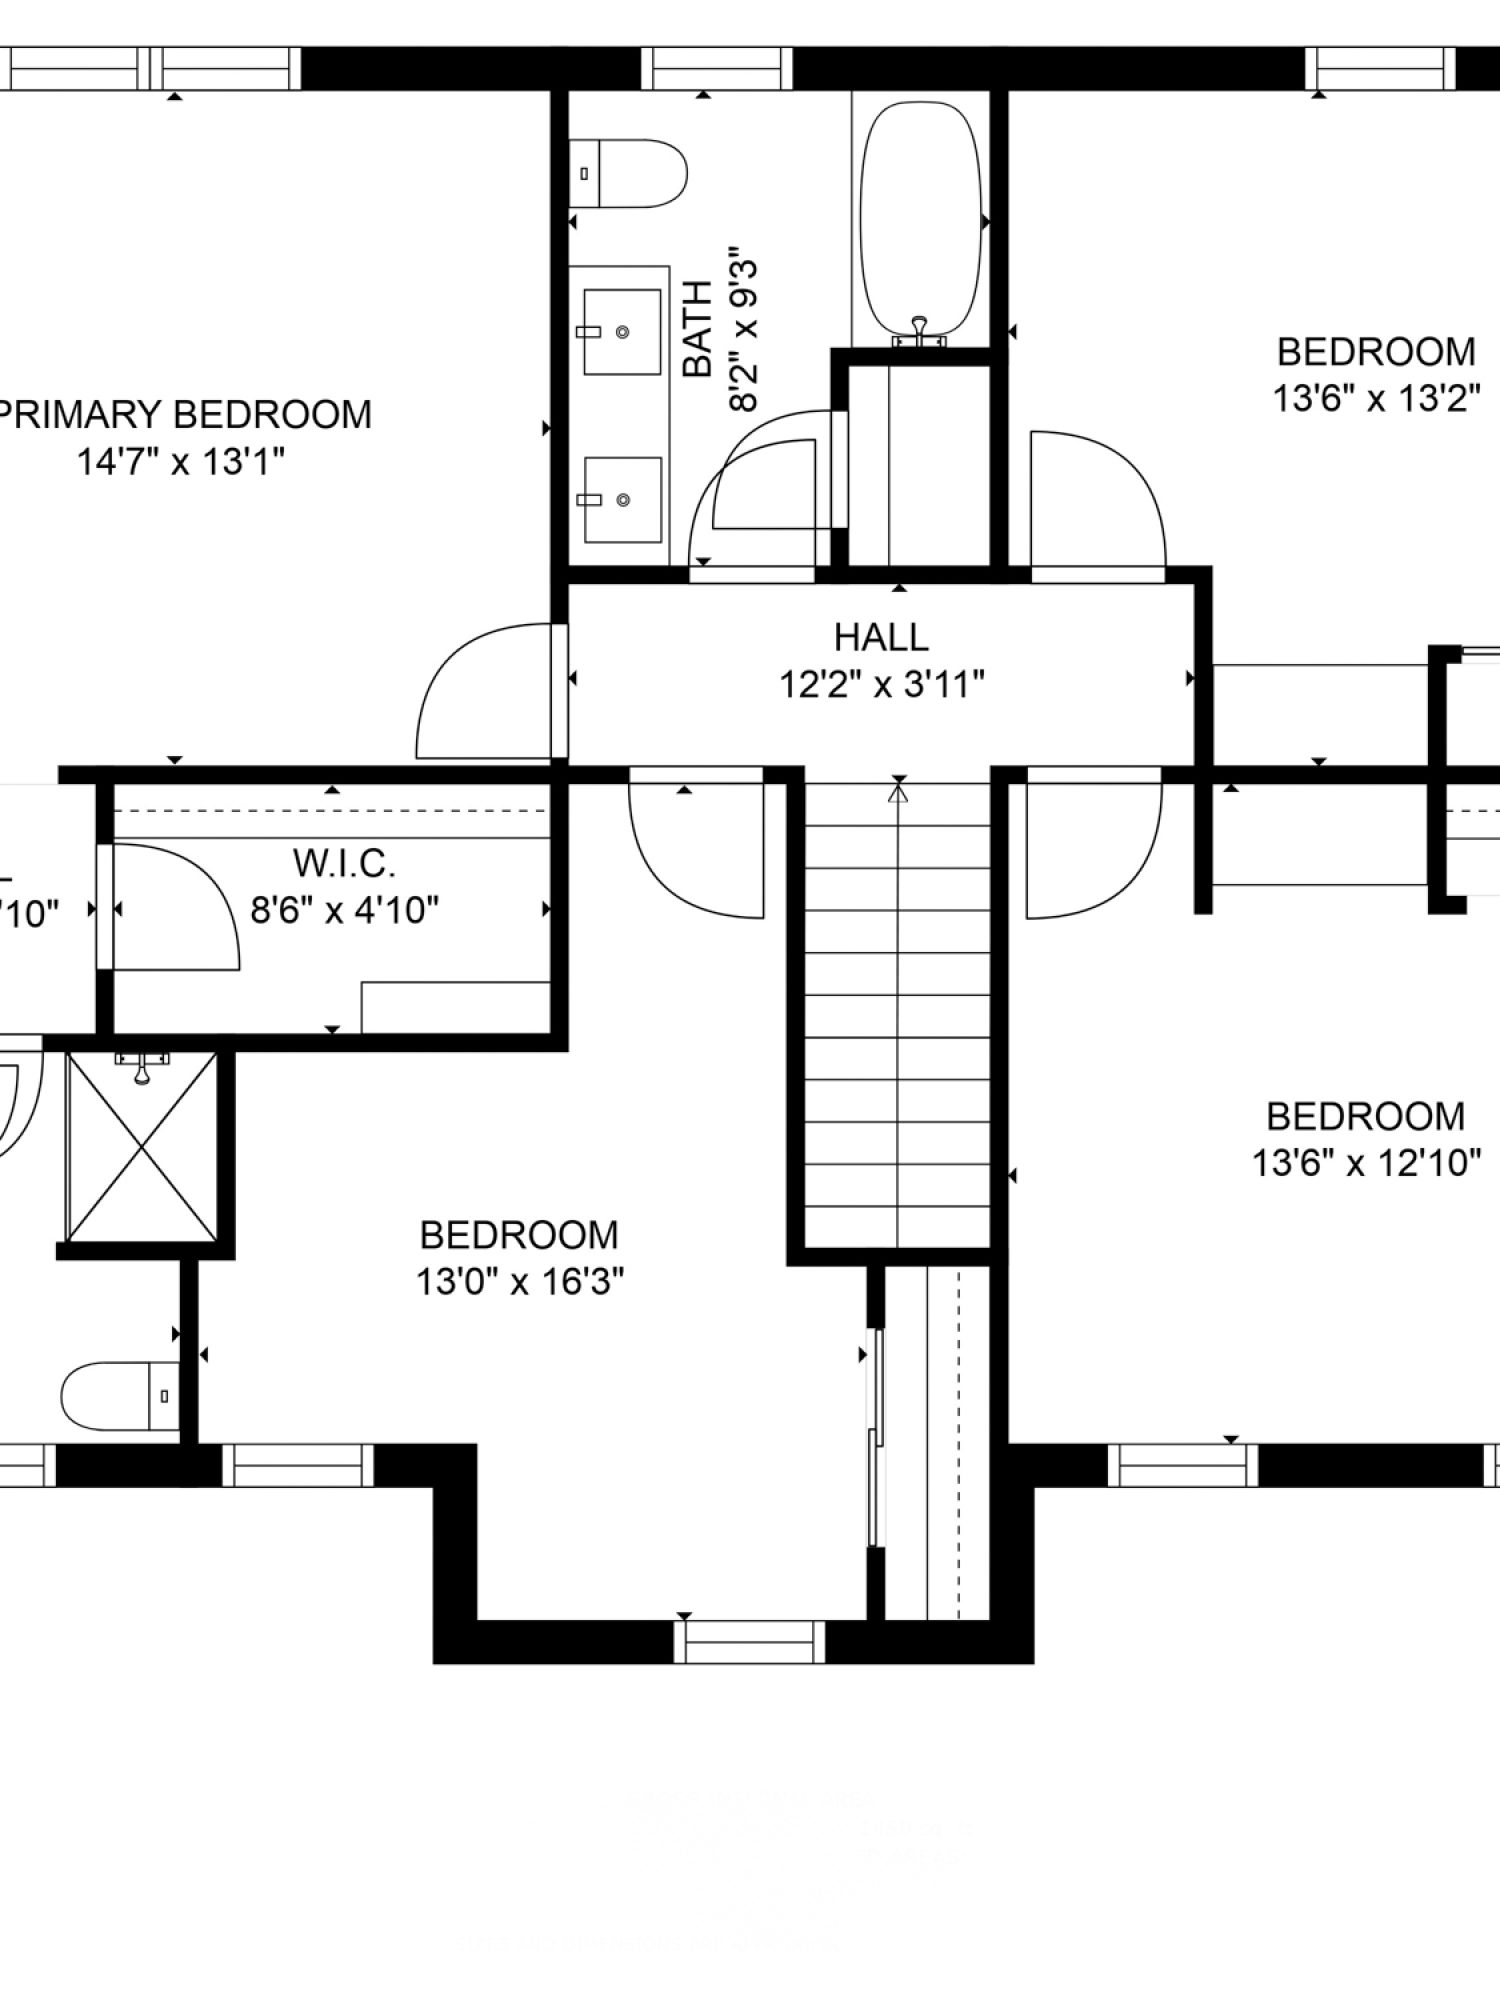 Basic Floor Plan